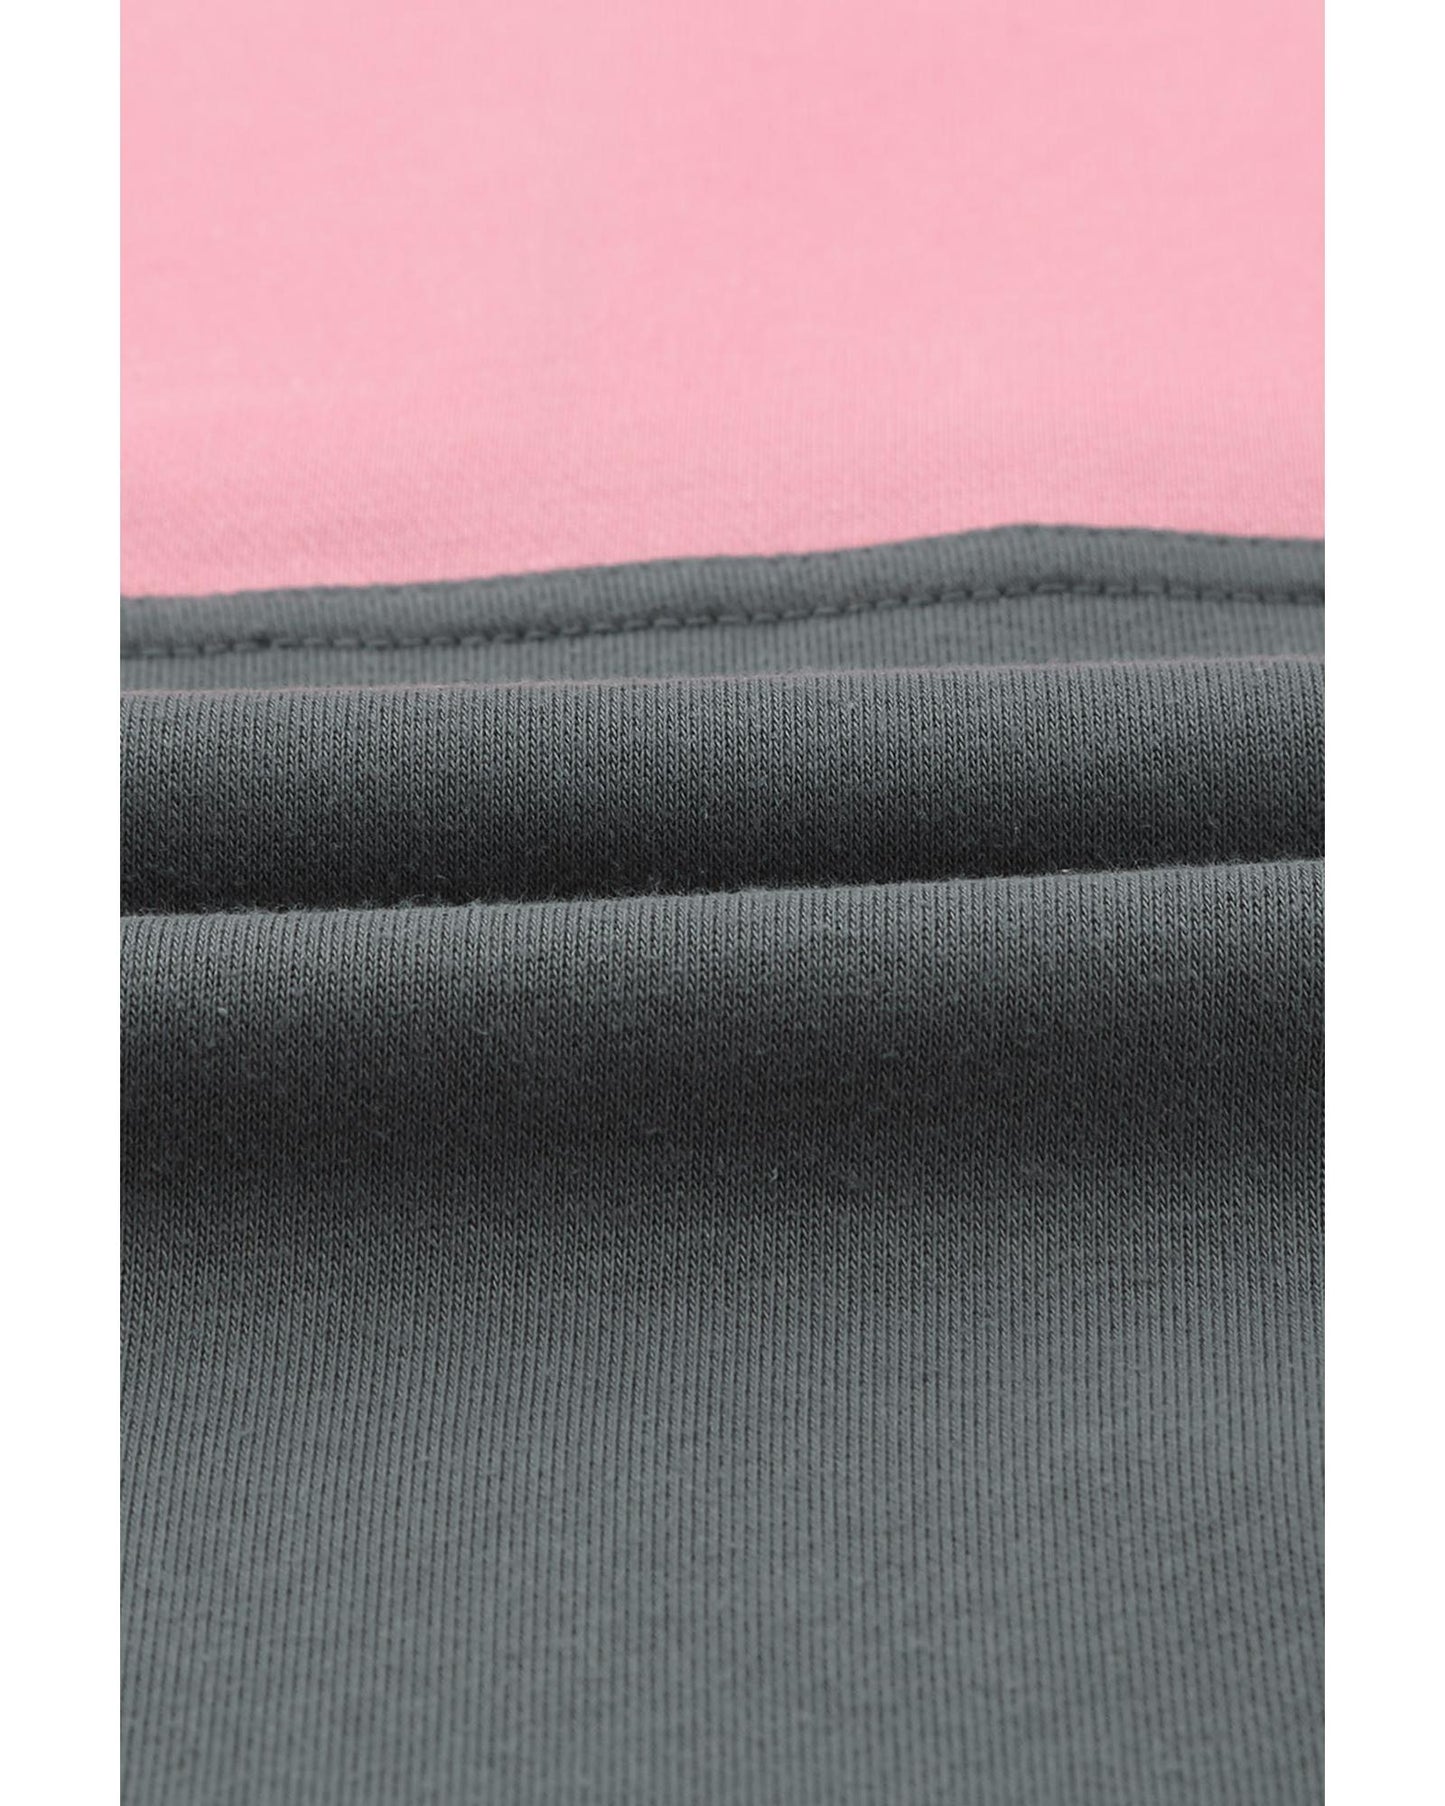 Azura Exchange Zipped Colorblock Sweatshirt with Pockets - XL